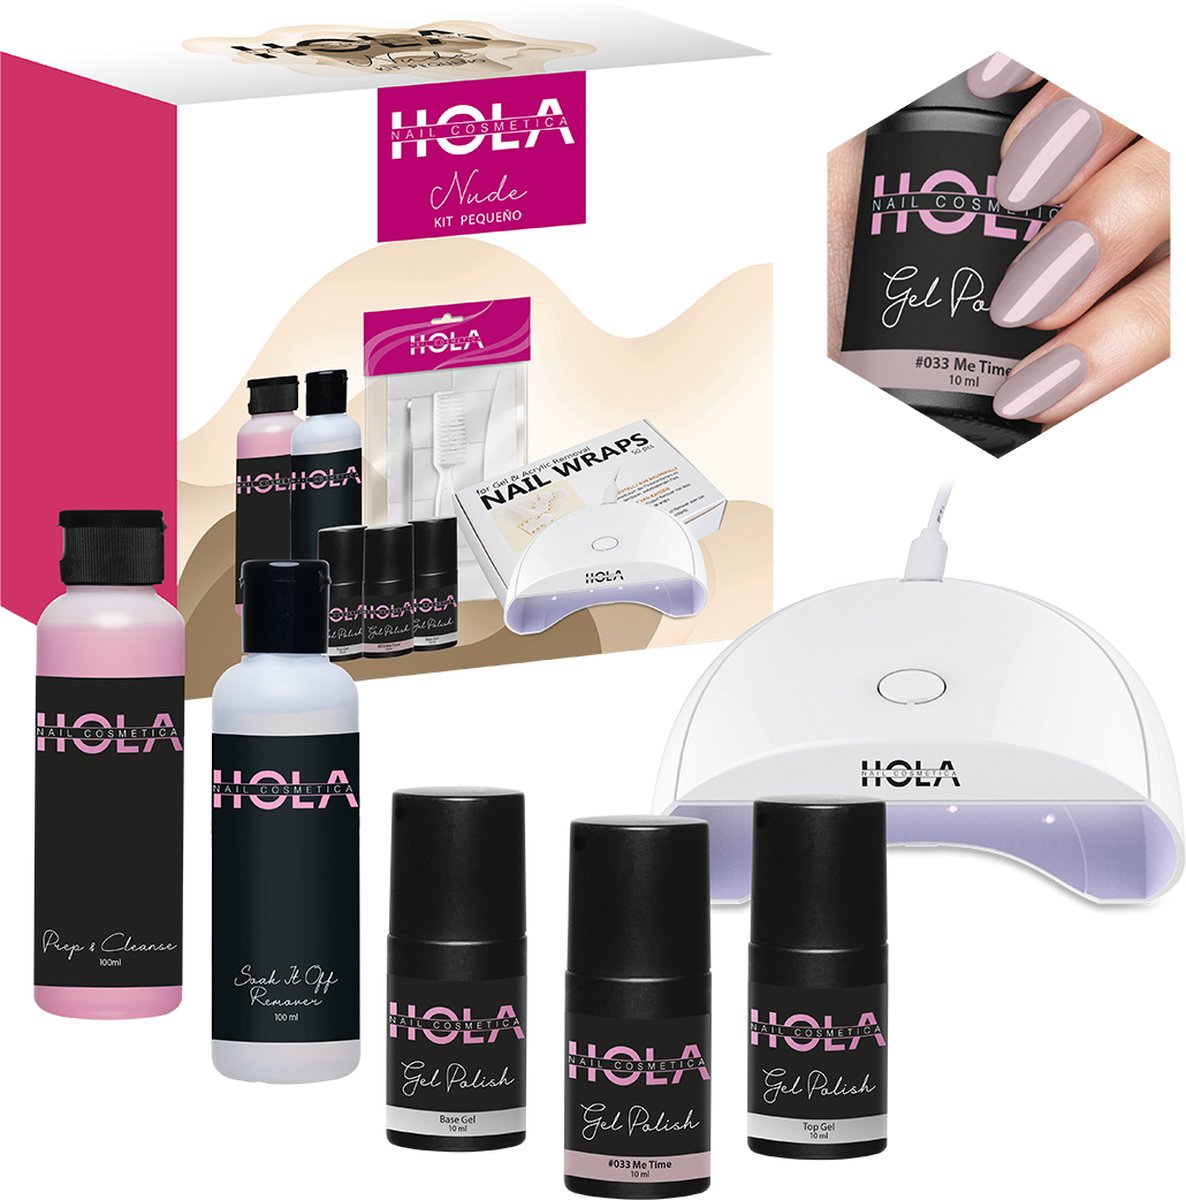 Hola Nail Cosmetica Gelpolish Kit Pequeno - Nude